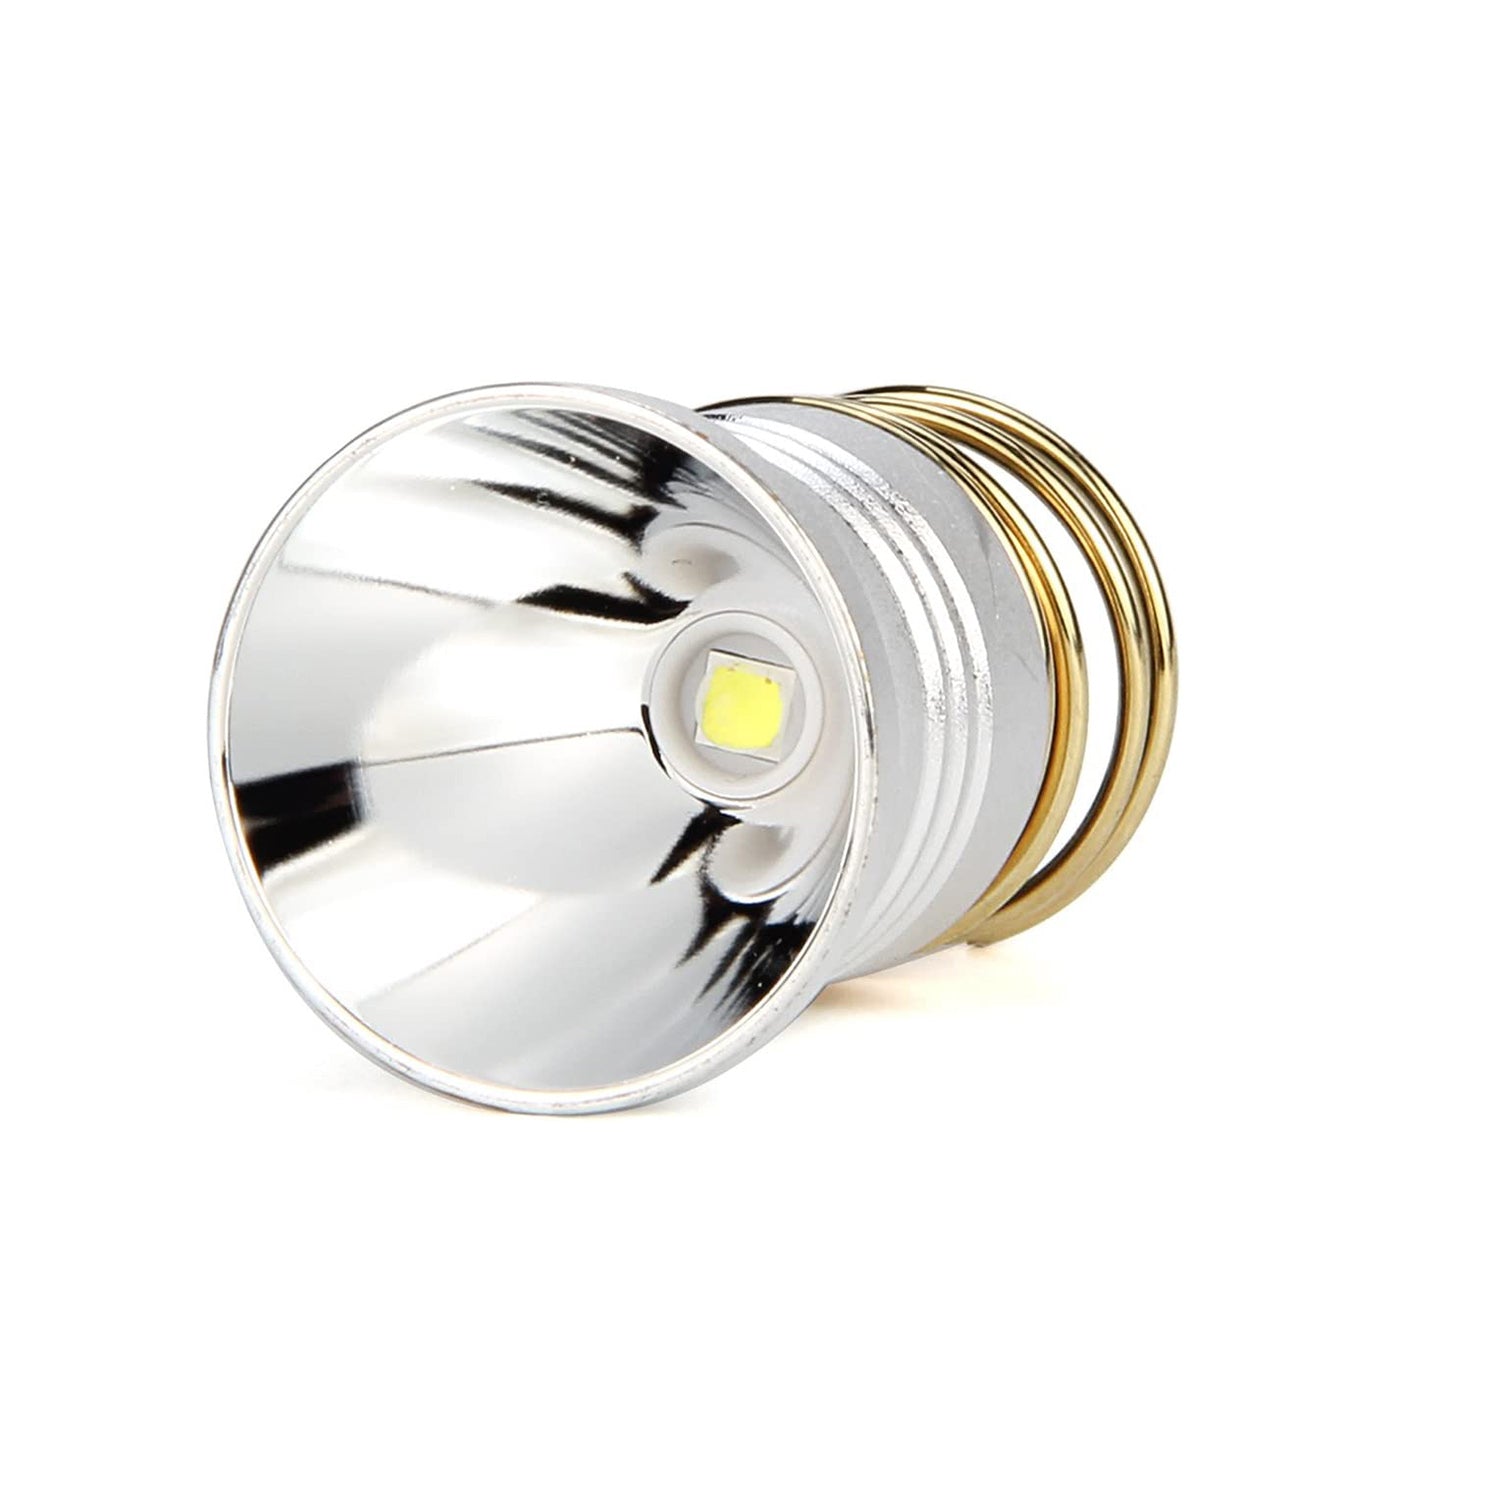 UltraFire V6 LED 26.5mm Bulb Reflector